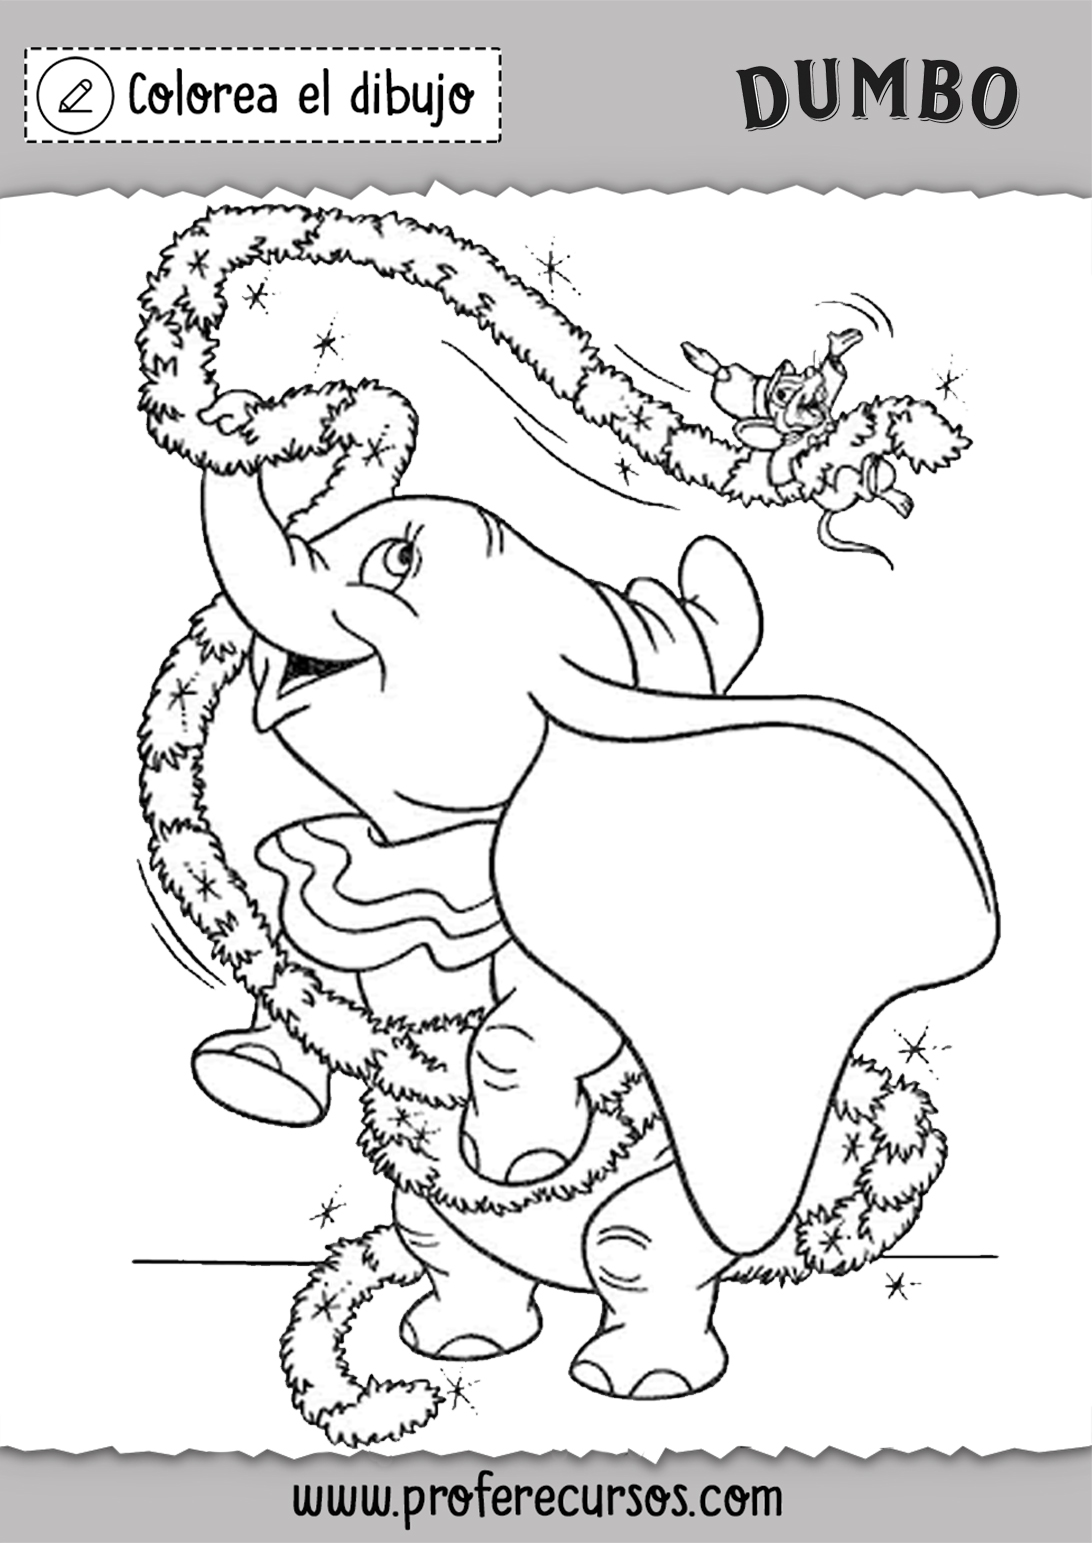 Como dibujar a Dumbo